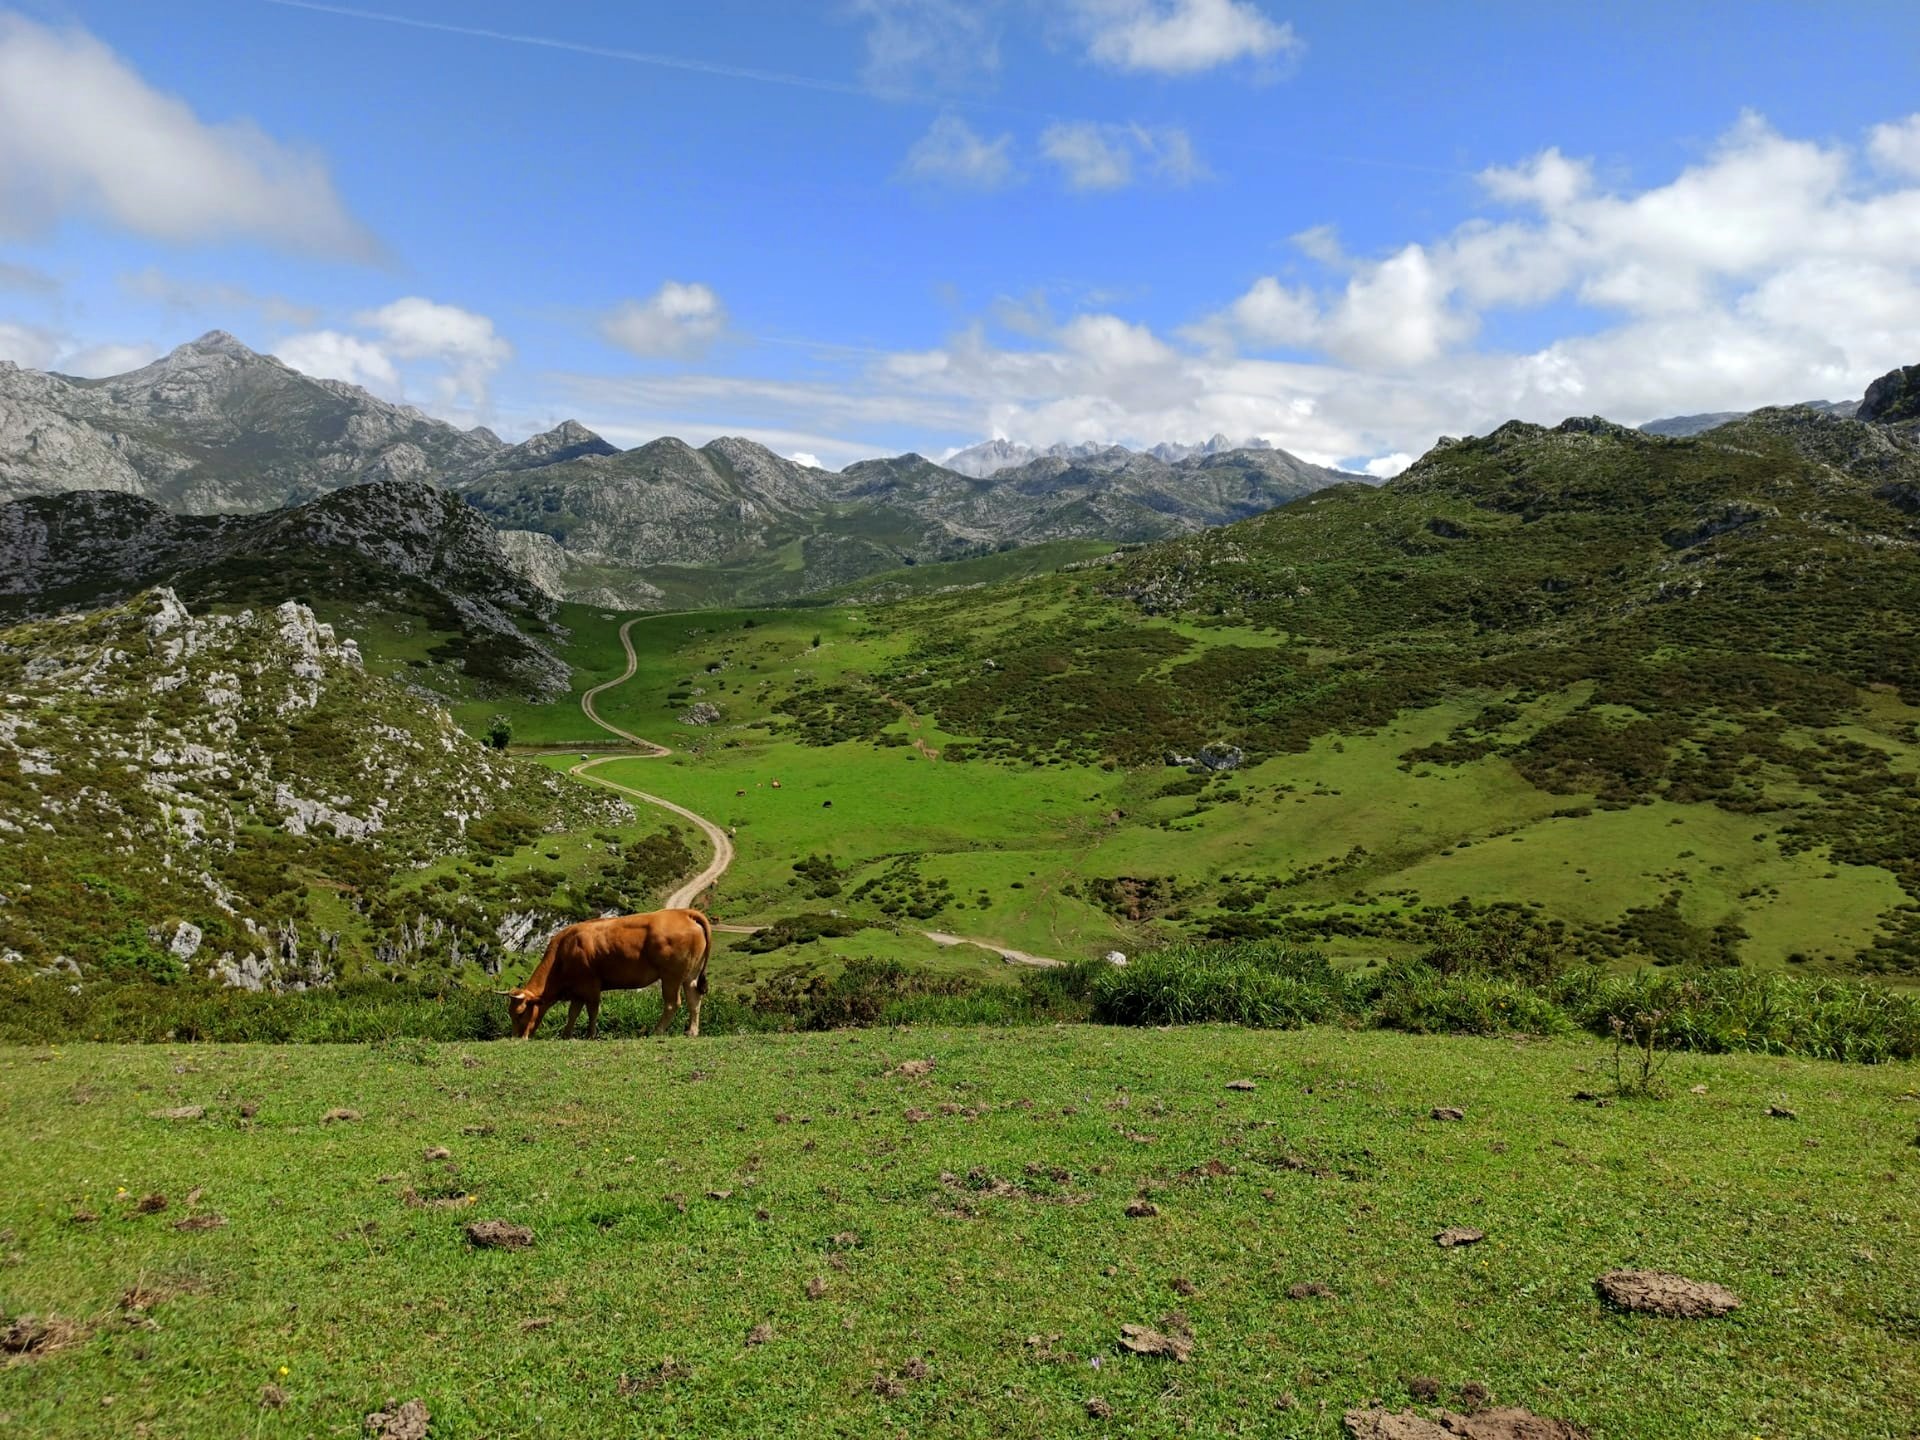 A path leading to the distant mountains of Picos de Europa, a European national park (photo: Bruno Alves)